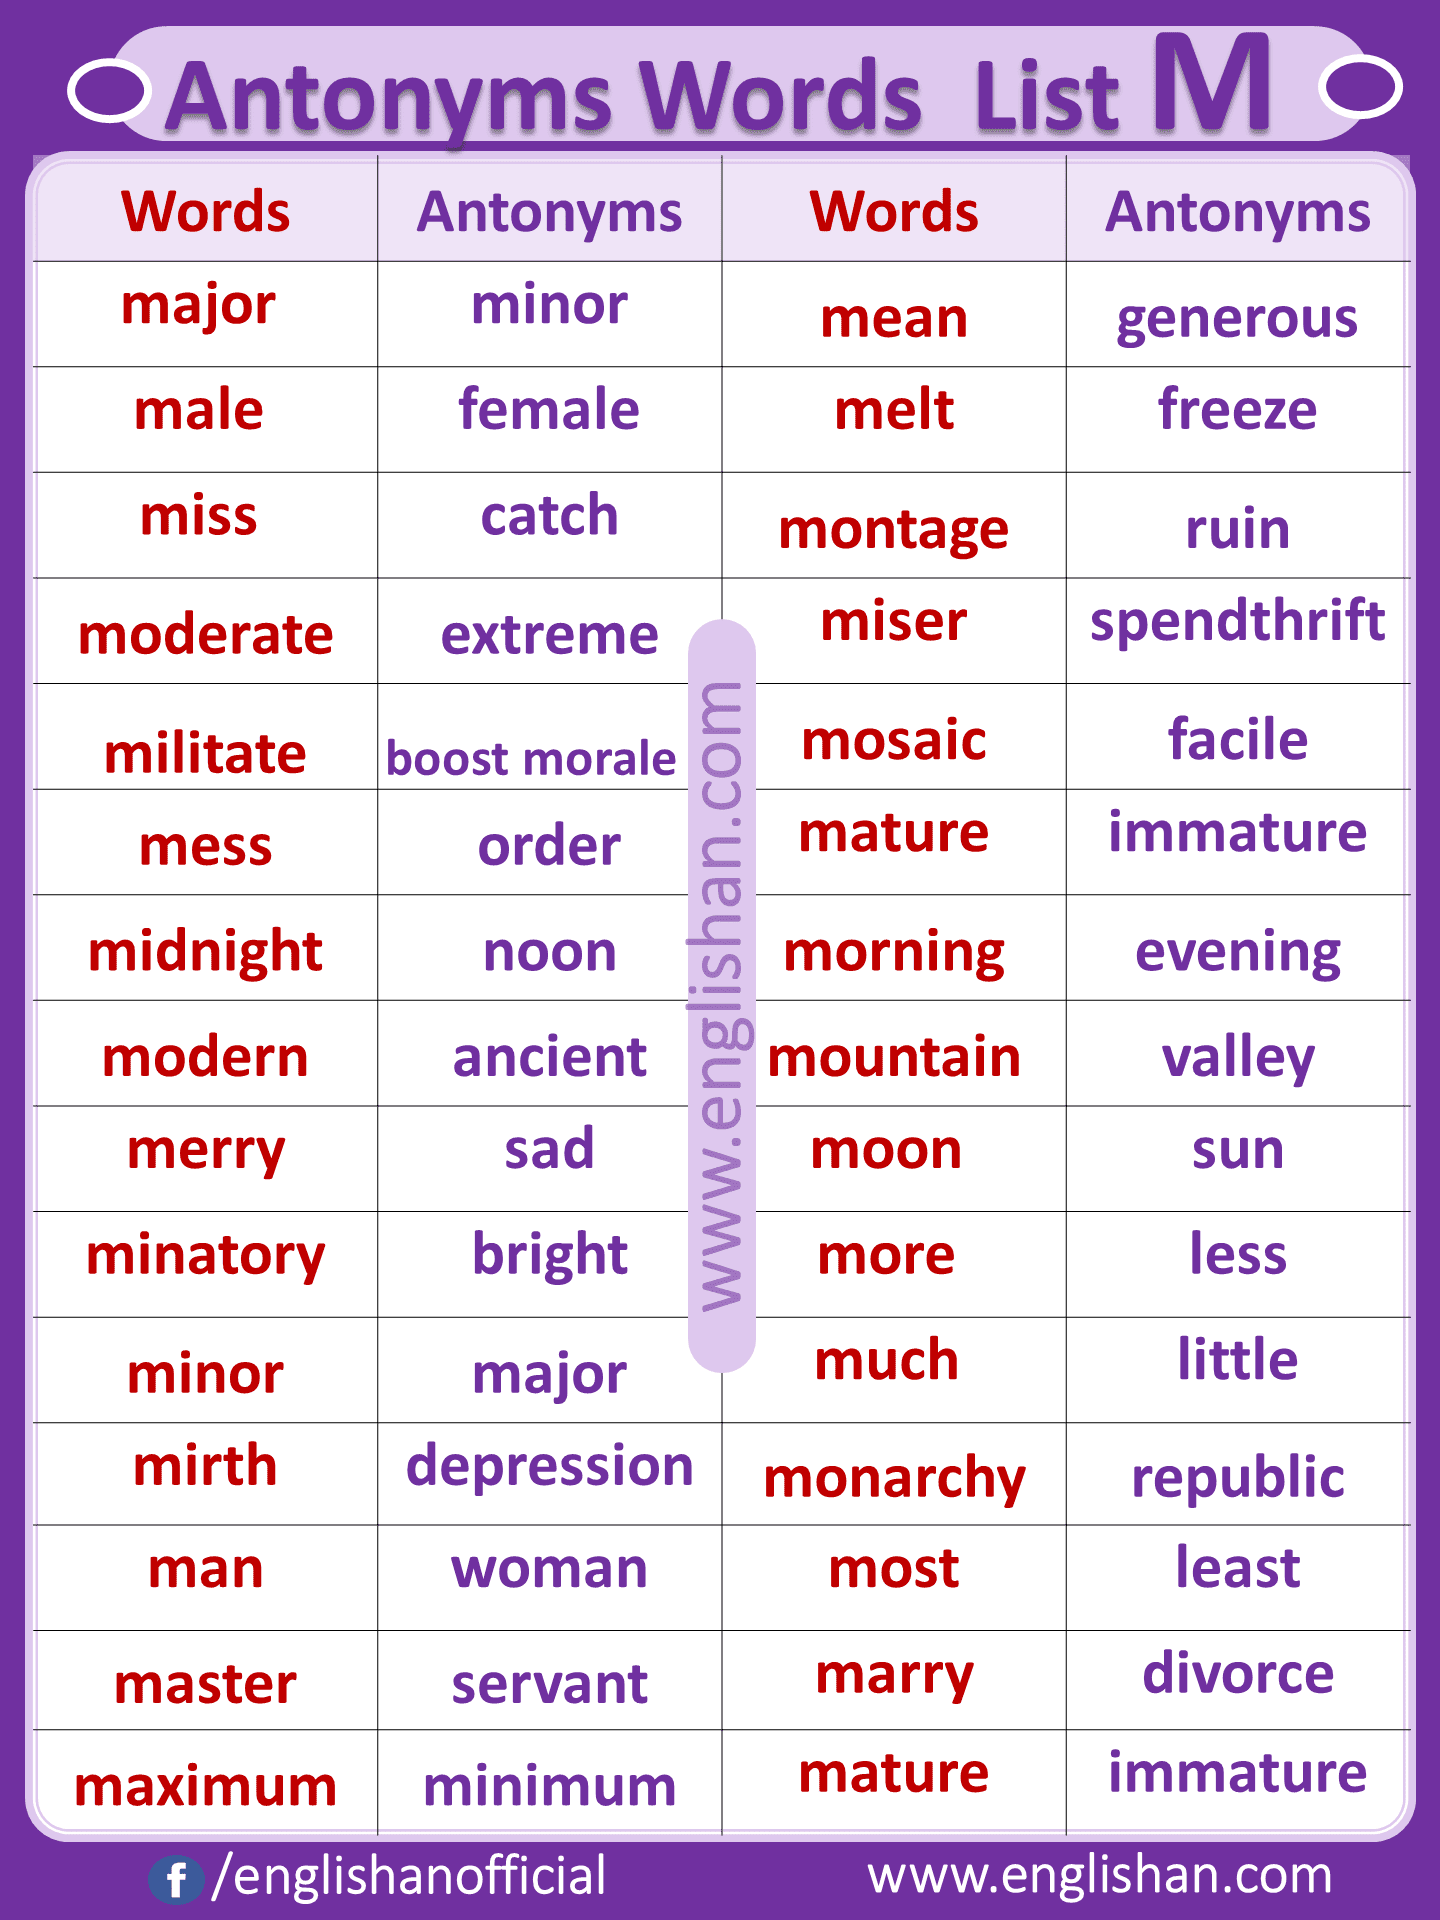 Antonyms Words List M